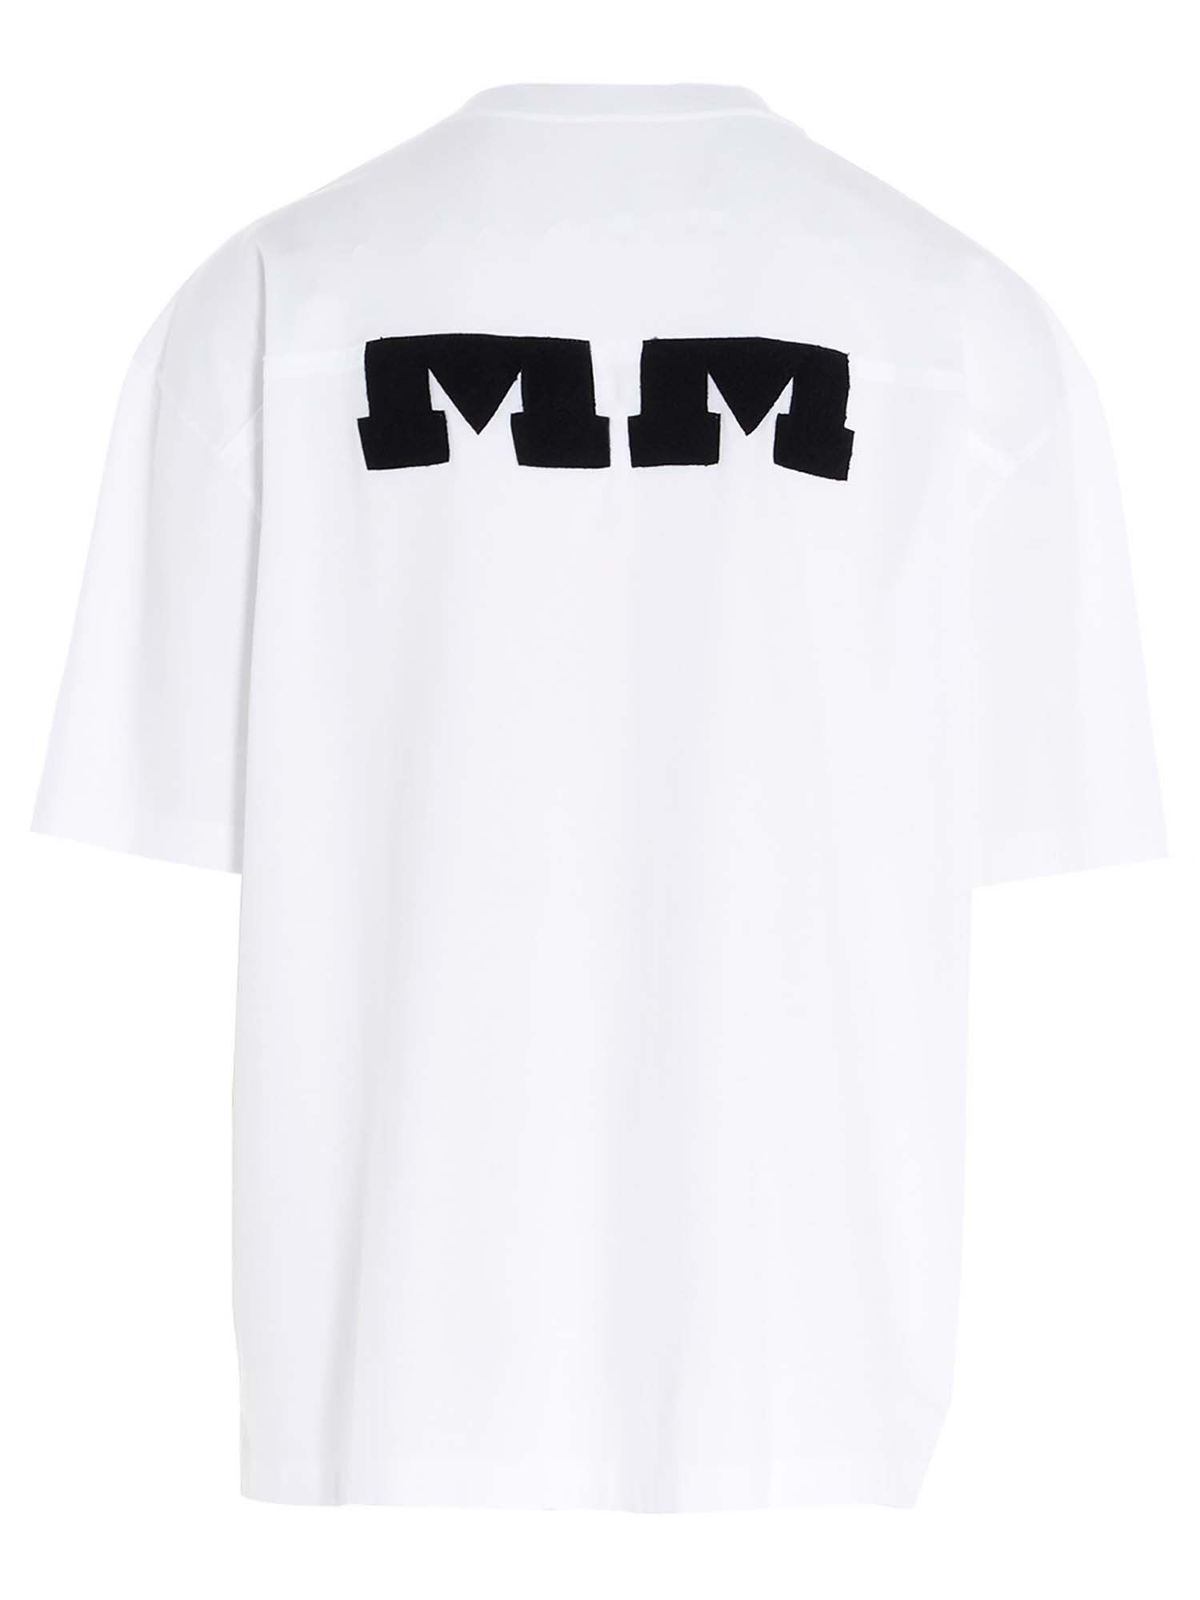 Tシャツ Maison Margiela - Tシャツ - 白 - S50GC0628S22816100